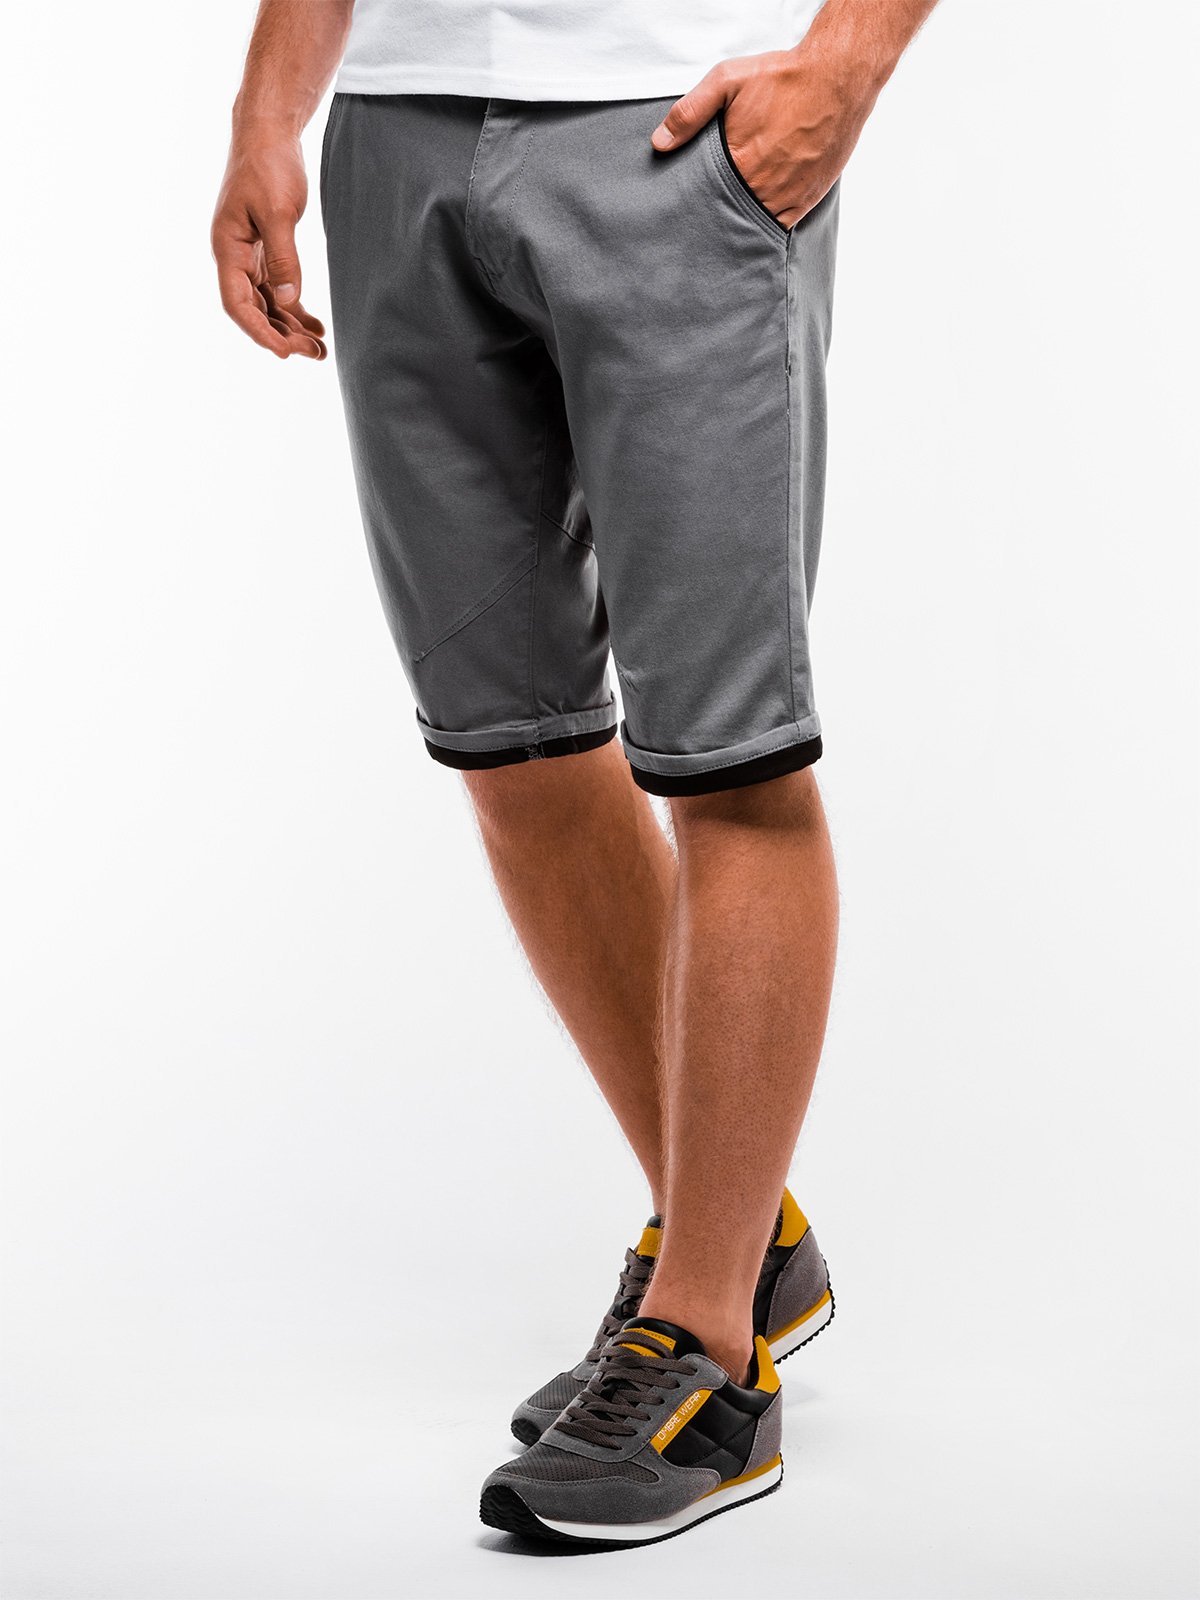 Men's chino shorts W150 - grey | MODONE wholesale - Clothing For Men